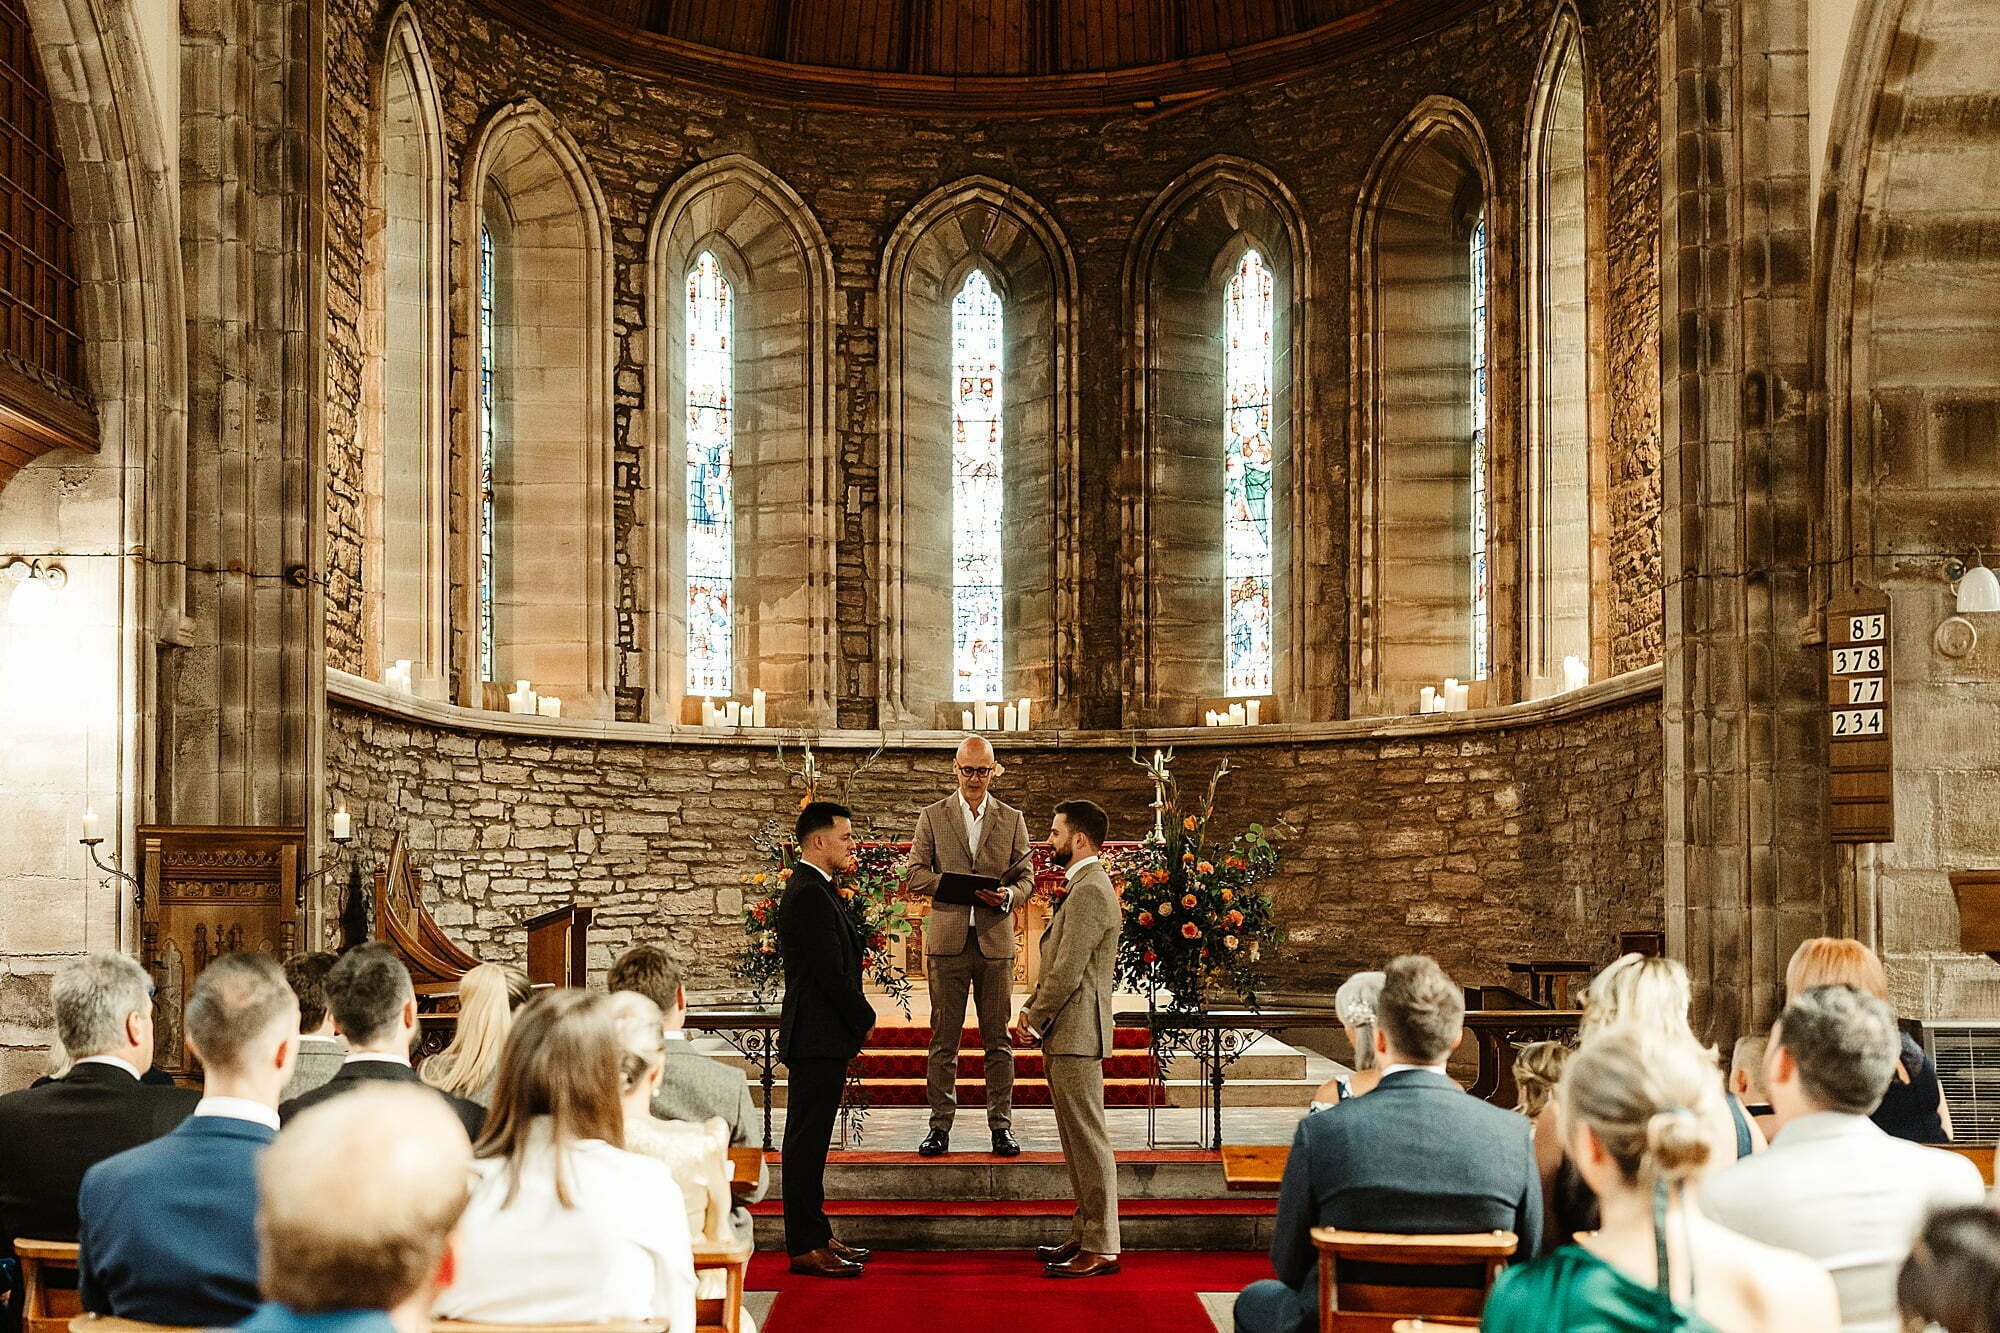 drumtochty church St Palladius interior inside wedding ceremony two grooms same sex couple